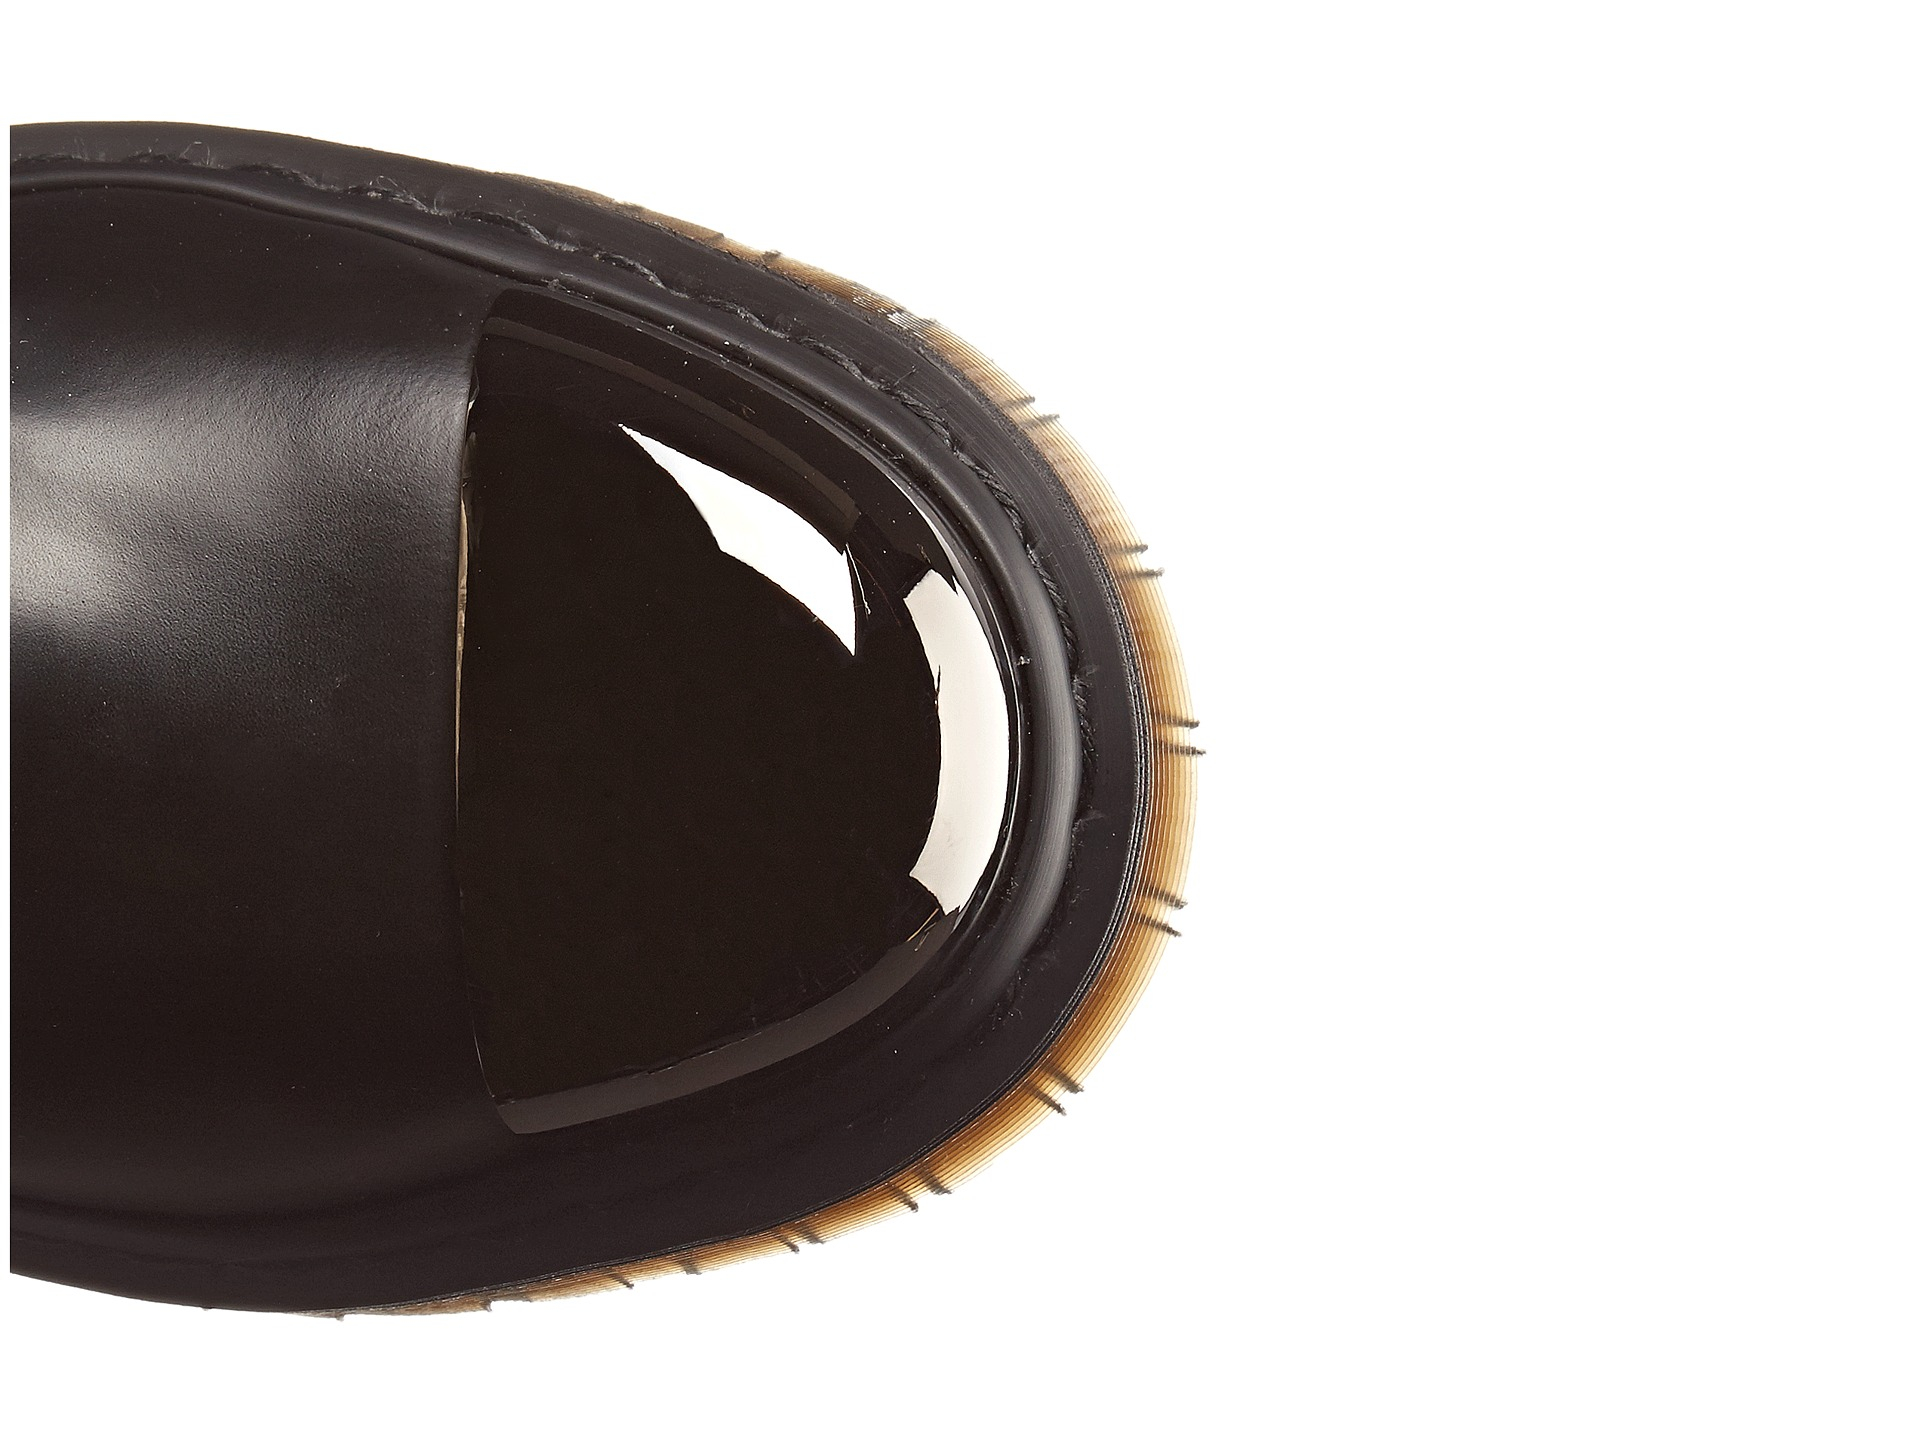 Dr. Martens Grasp External Fashion Steel Toe Cap Boot in Black | Lyst